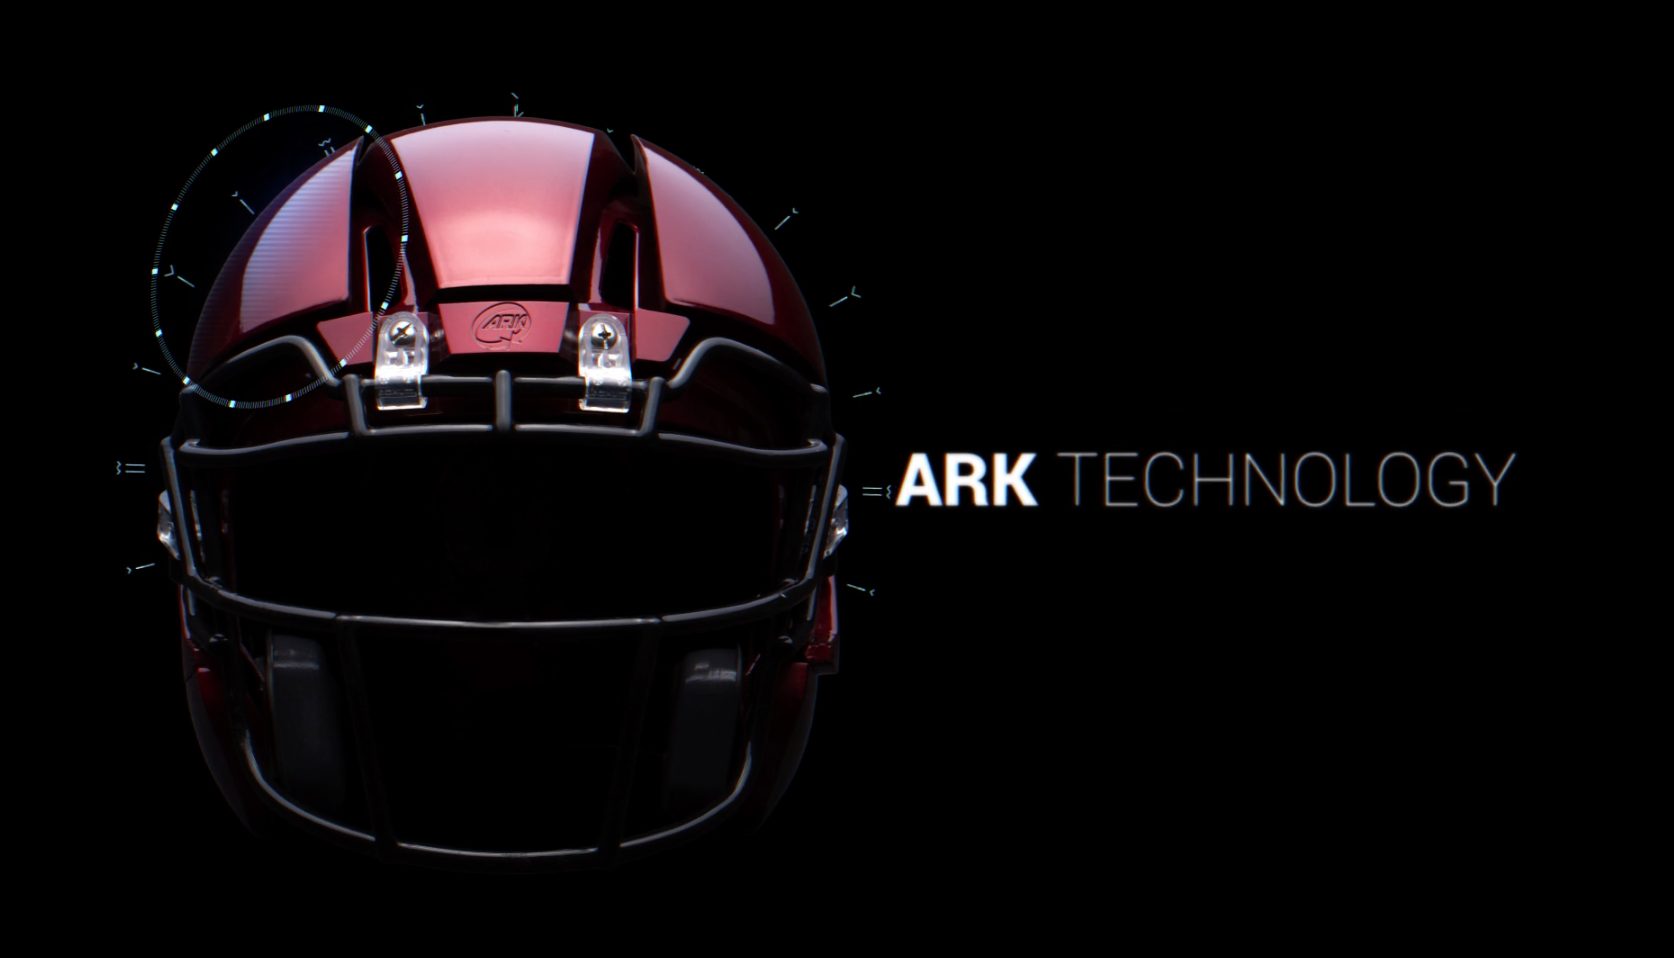 The Ark Helmet